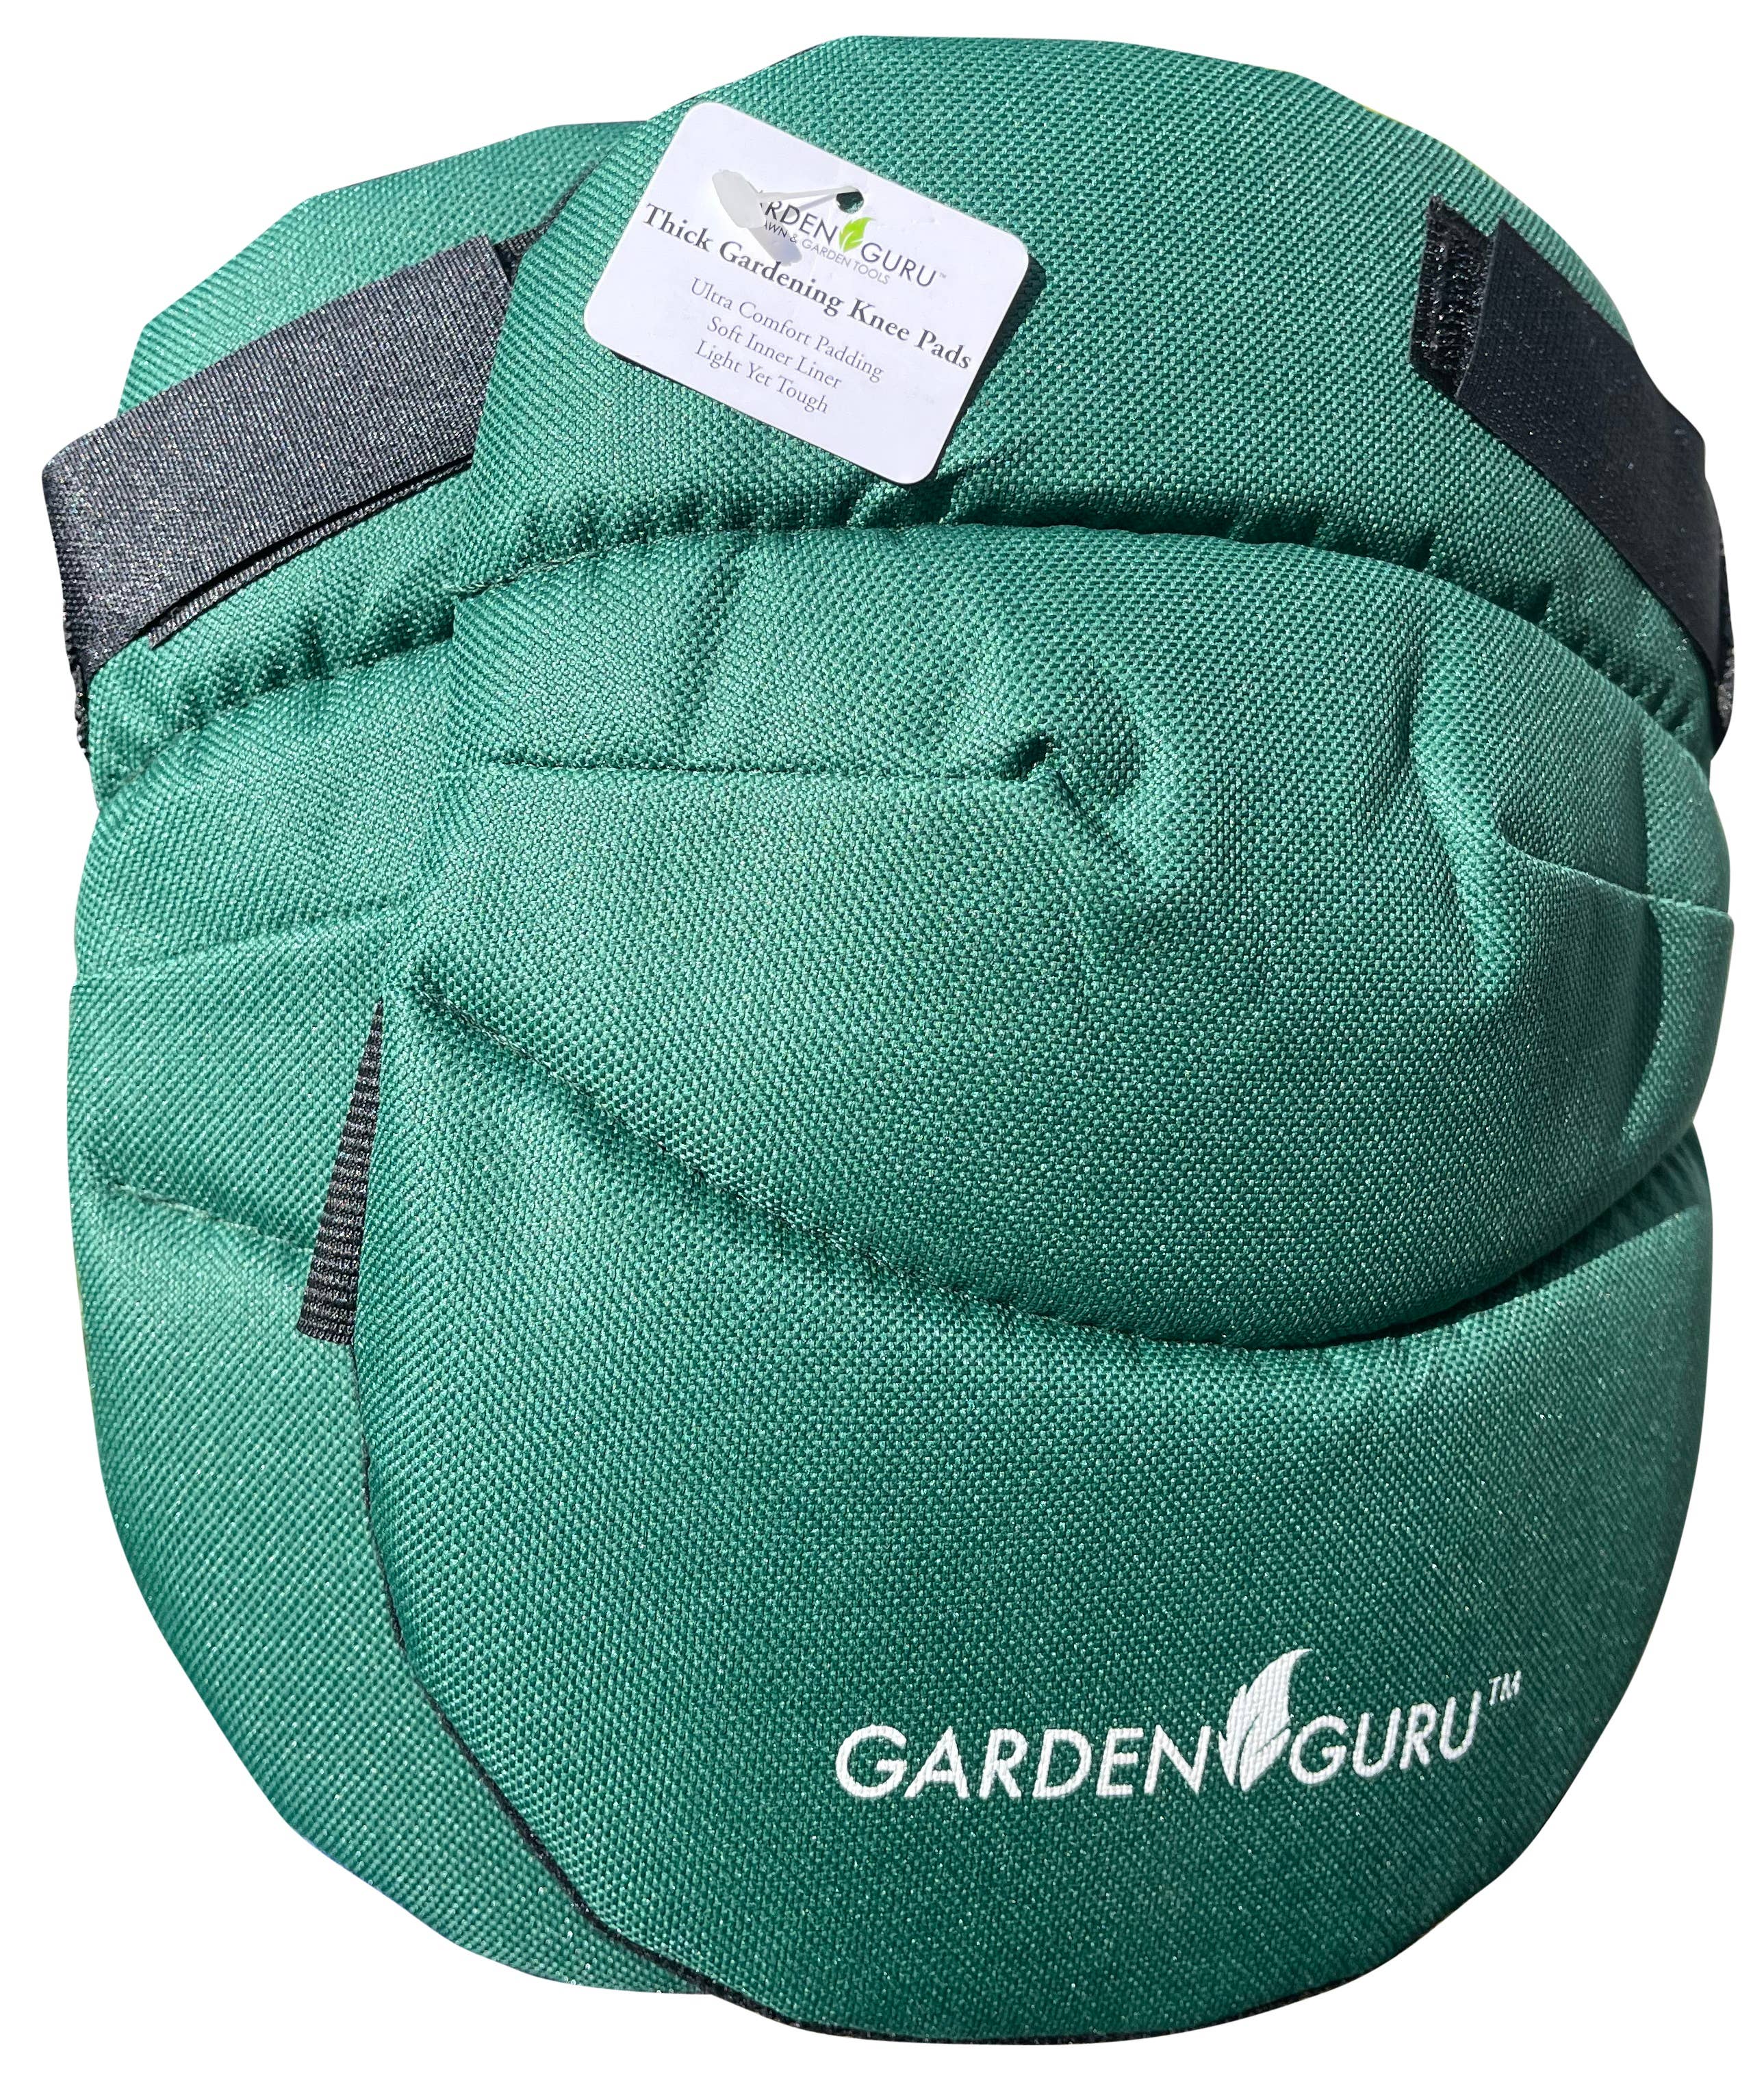 Garden Guru Ratchet Hand Pruning Shears - Professional Garden Clippers with  Ergonomic Grip - Makes Tough Cuts Easy 